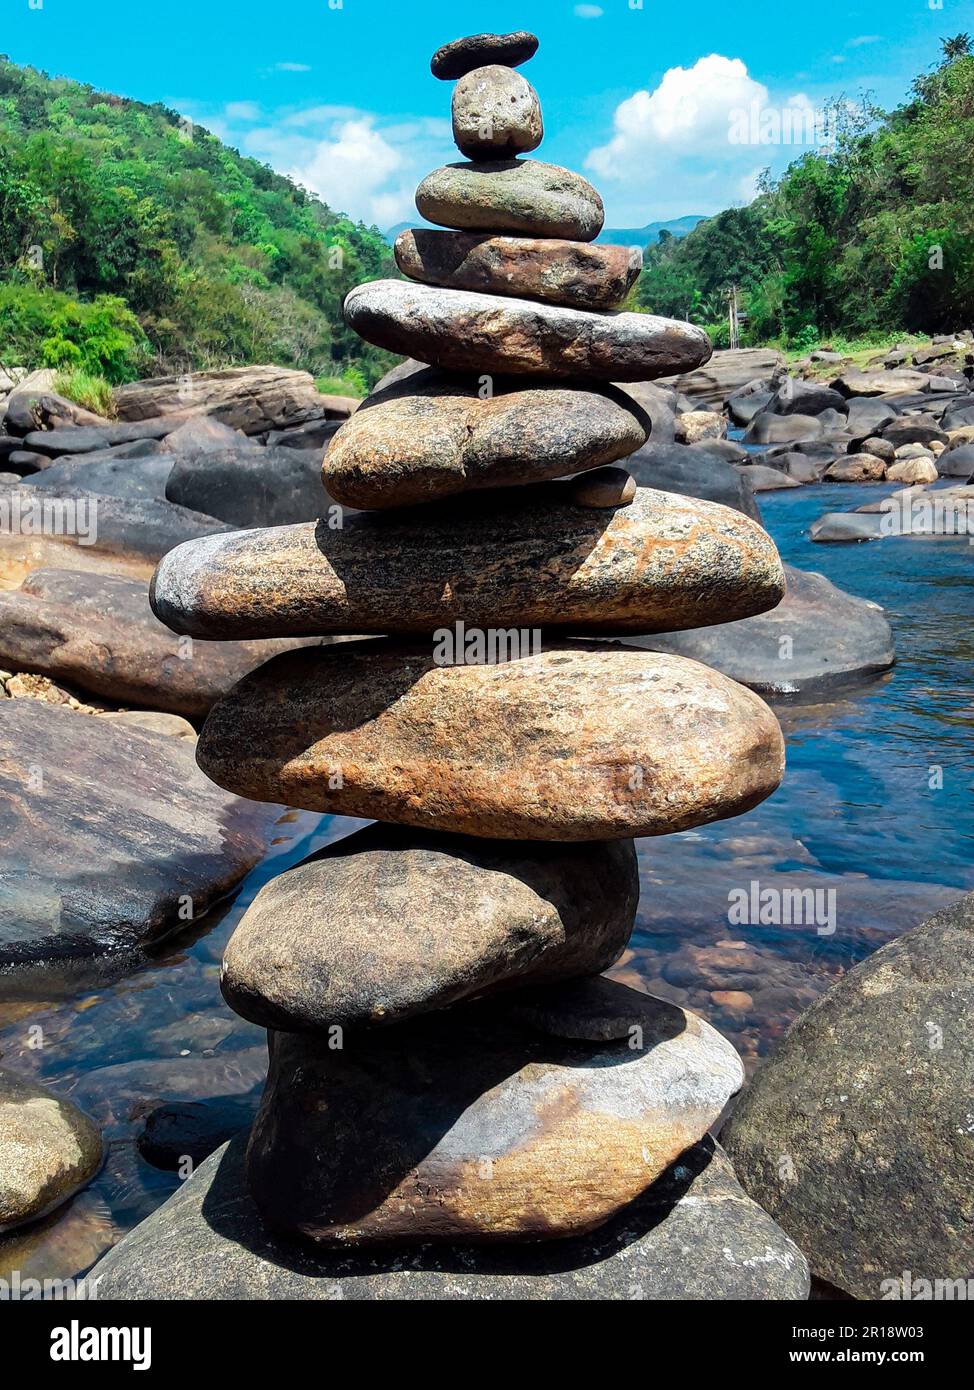 Pile of stones in a lake background. Stone balance. Close-up portrait shot Stock Photo